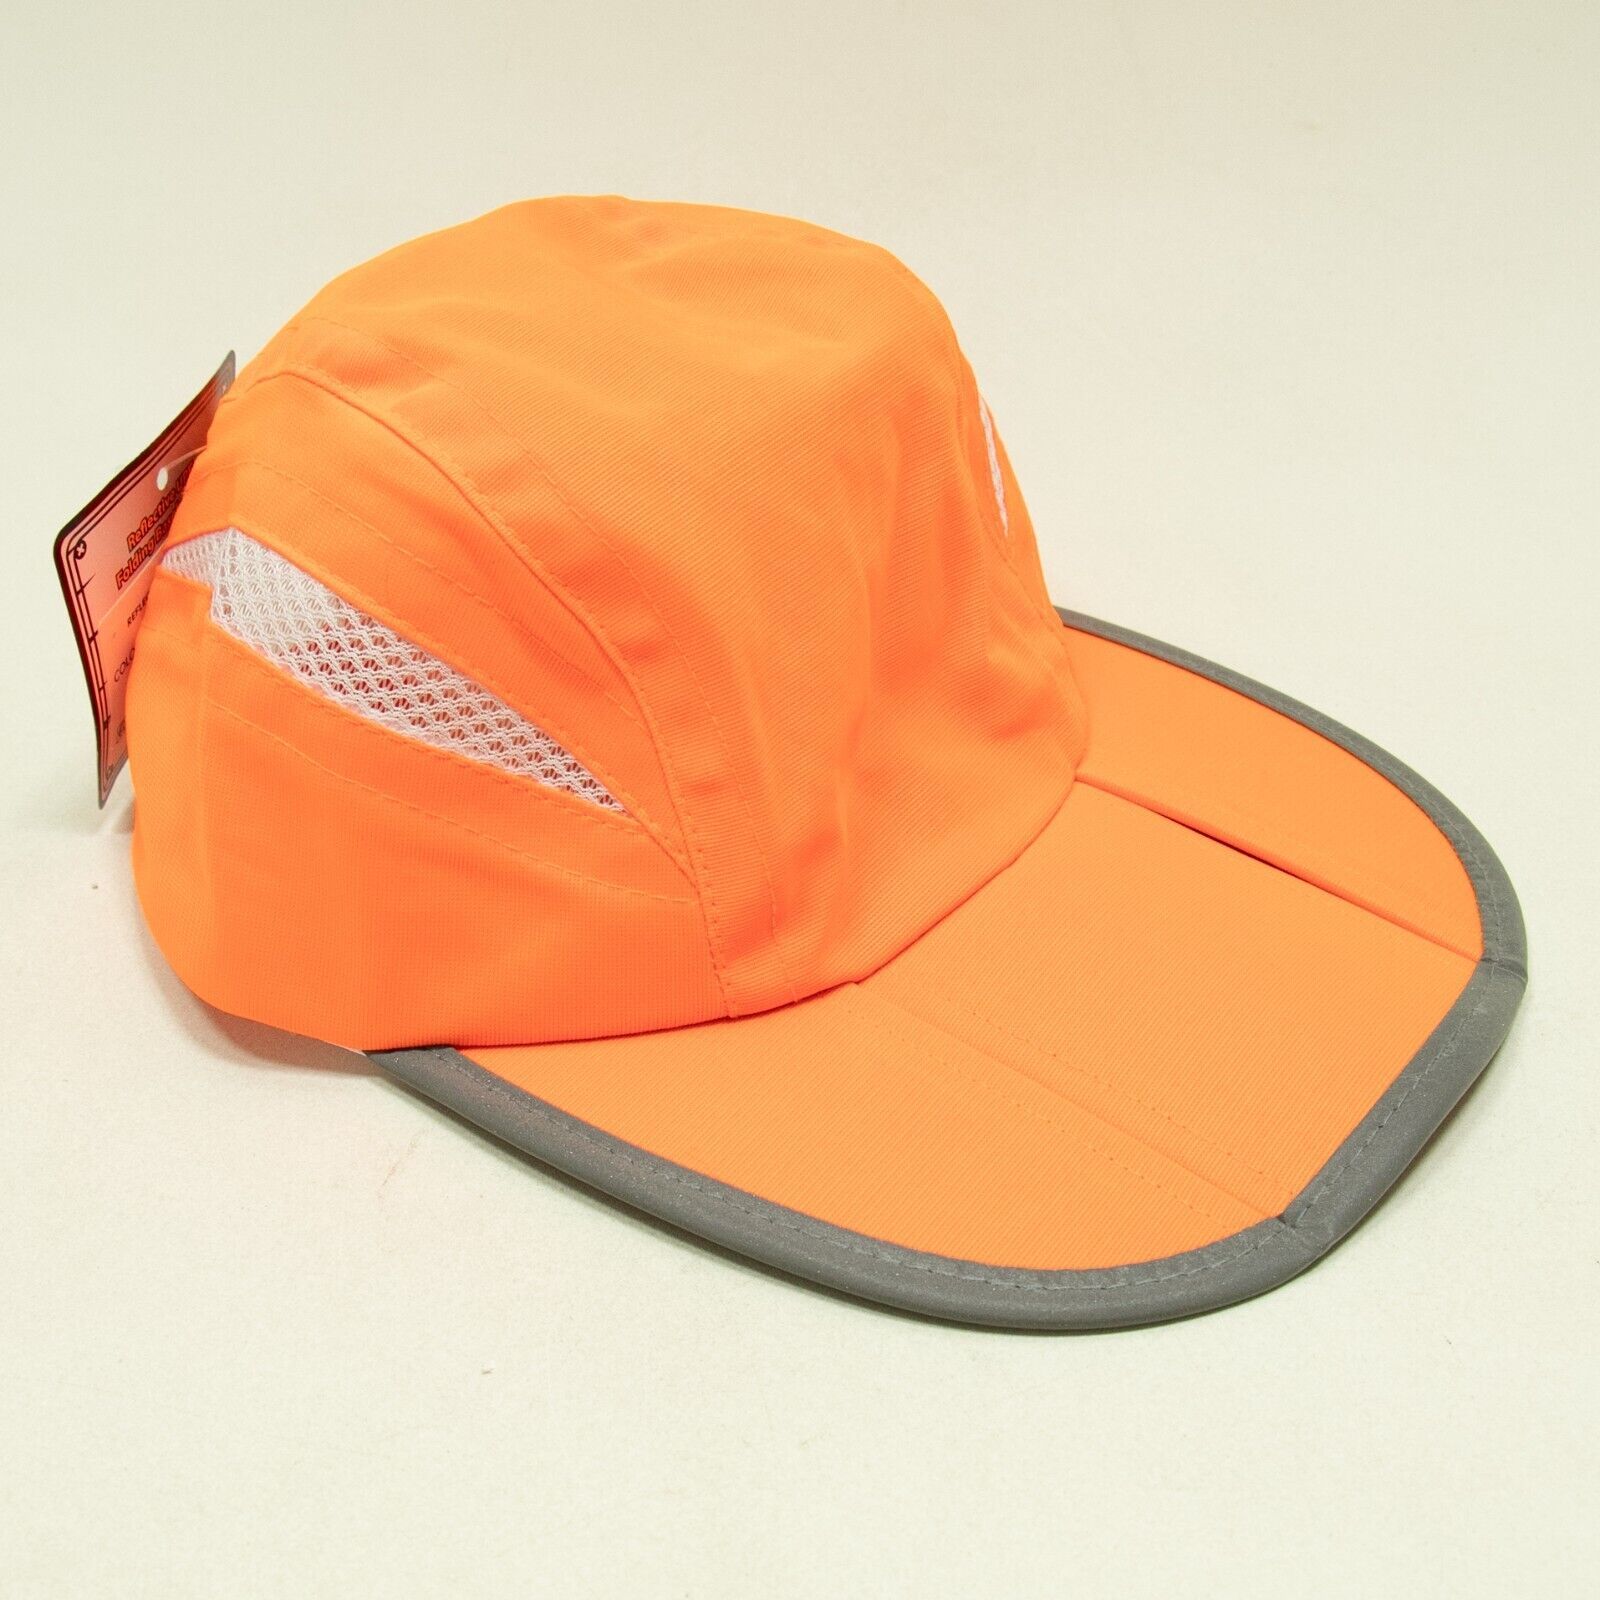 Primary image for Rockline Pro Gear Orange Baseball Cap Waterproof Foldable Quick Drying Sun Hat